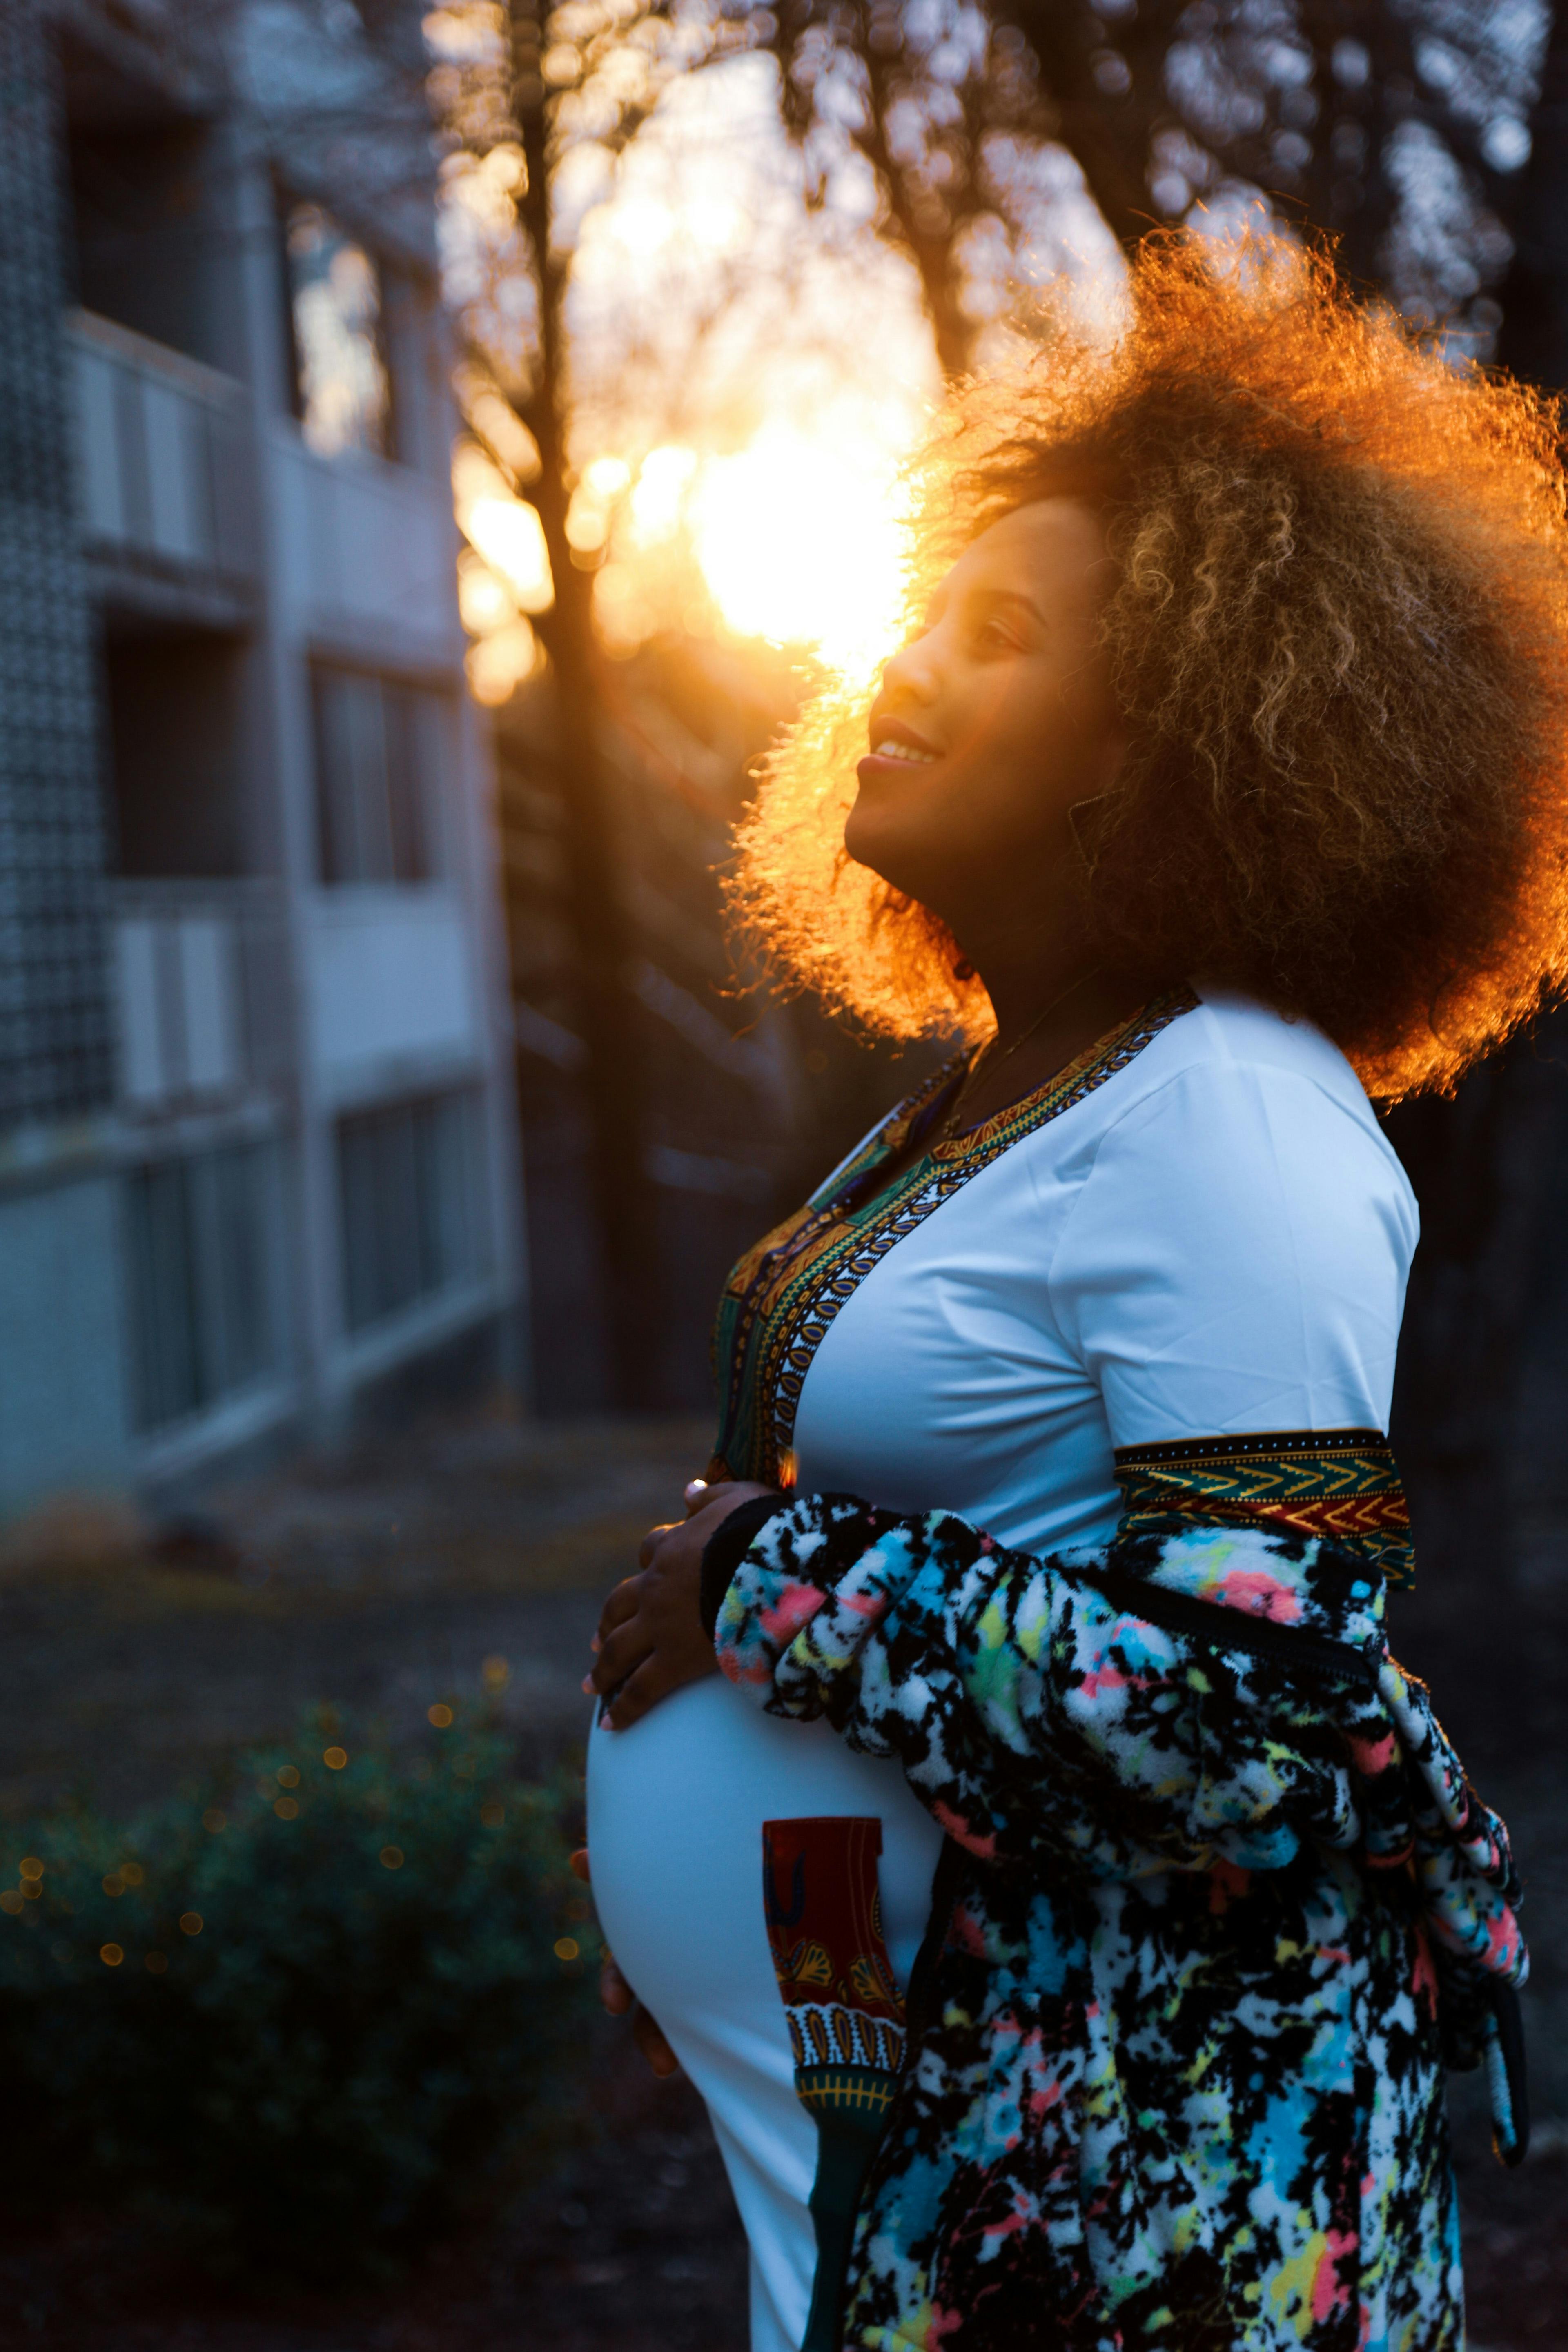 ‘Momnibus’ legislation aims to help black moms